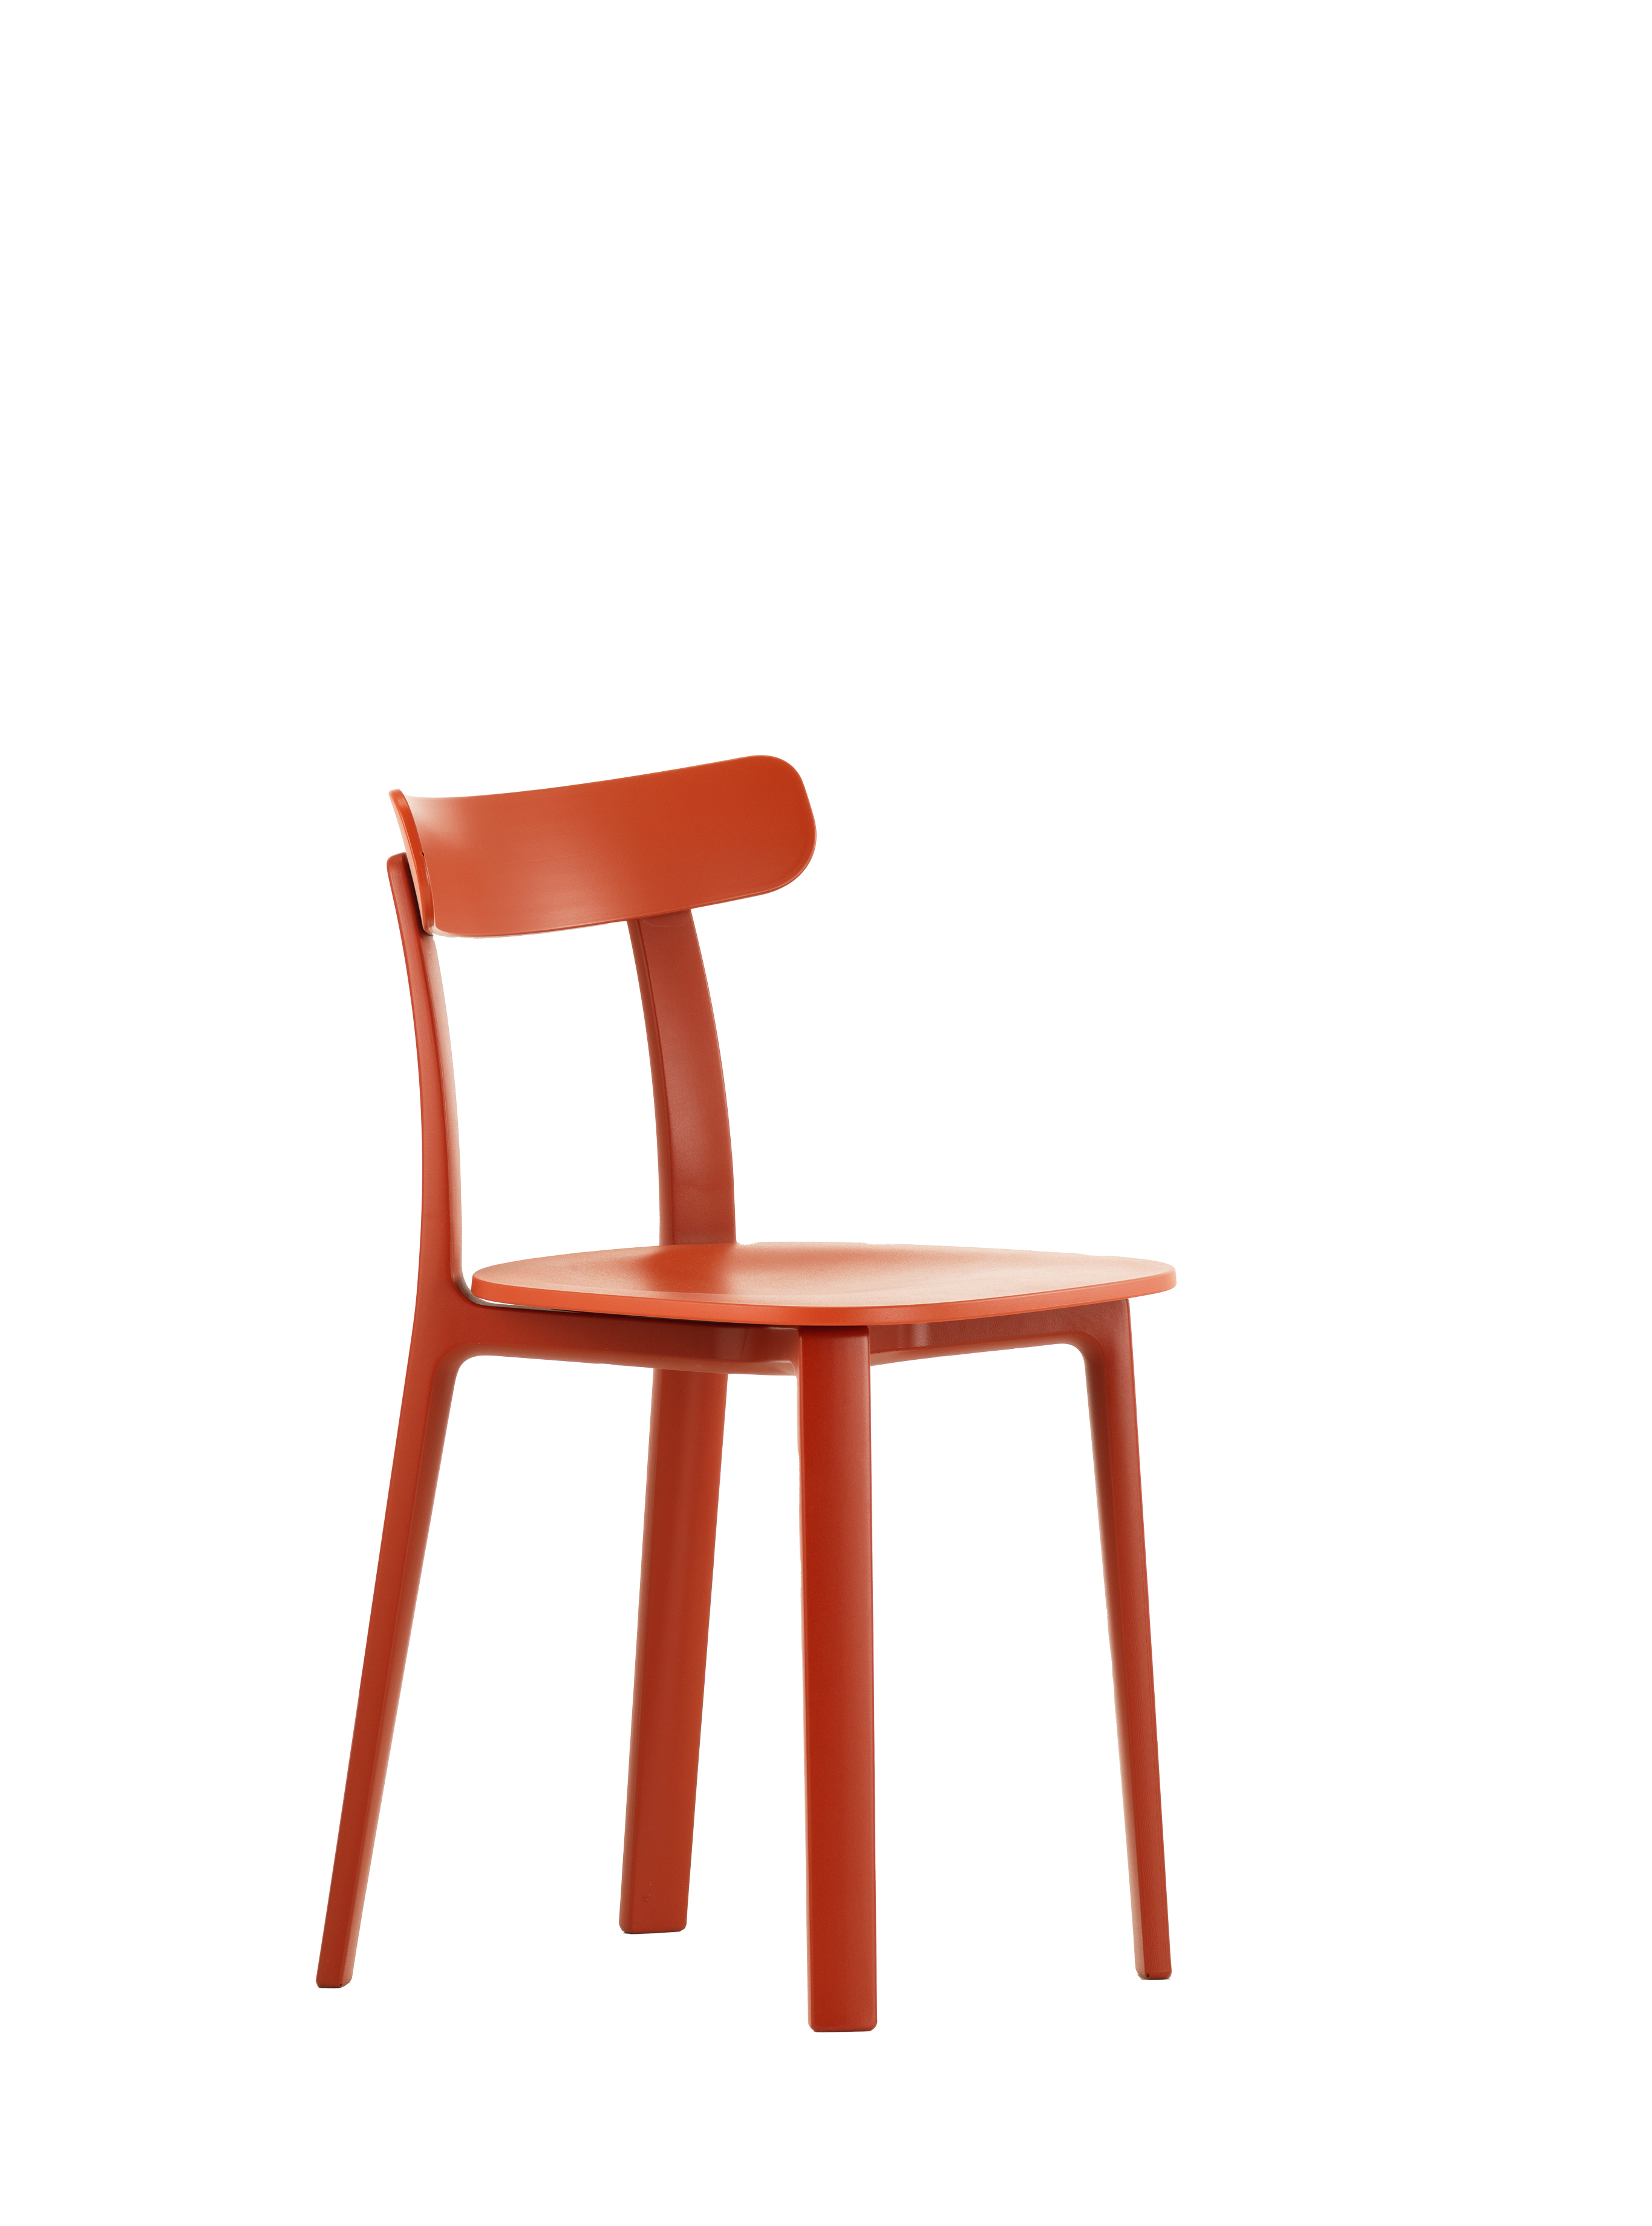 All Plastic Chair Orange